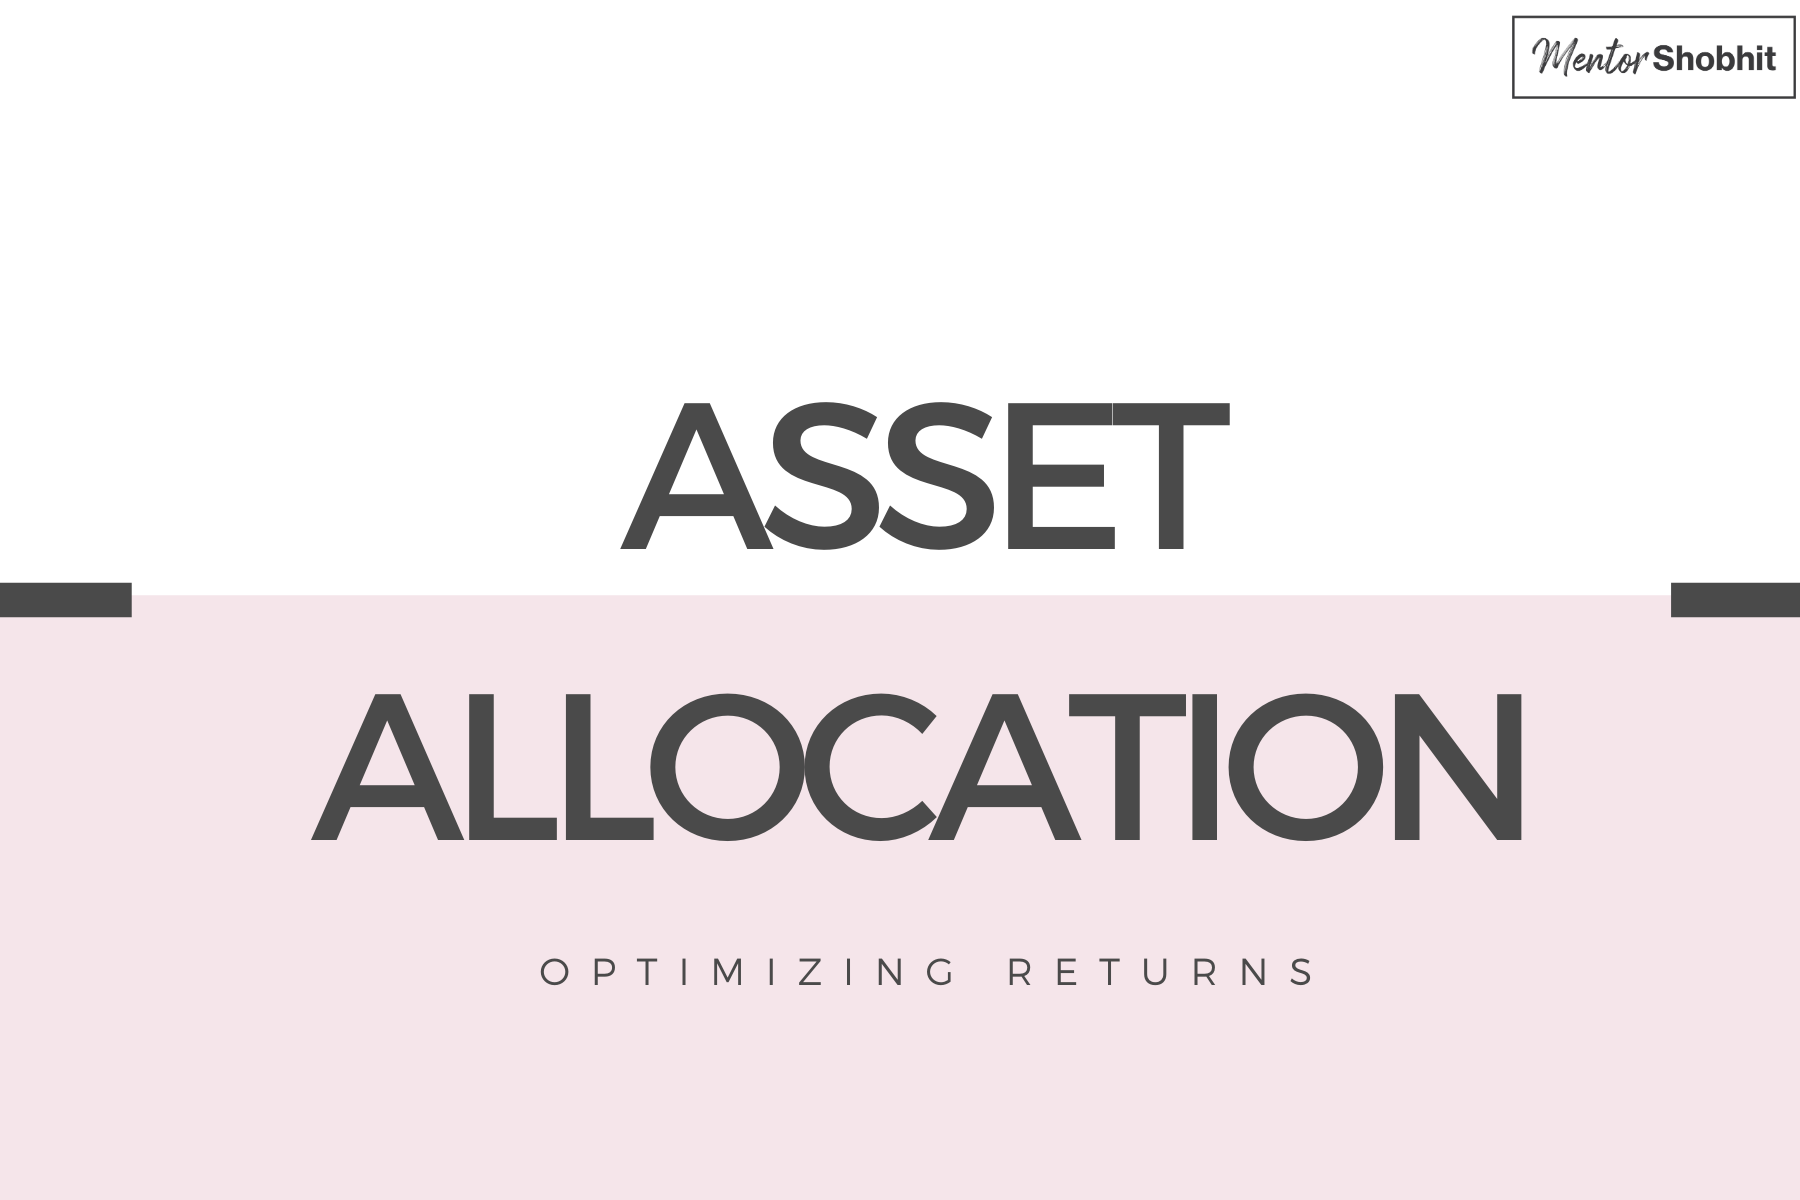 Asset allocation